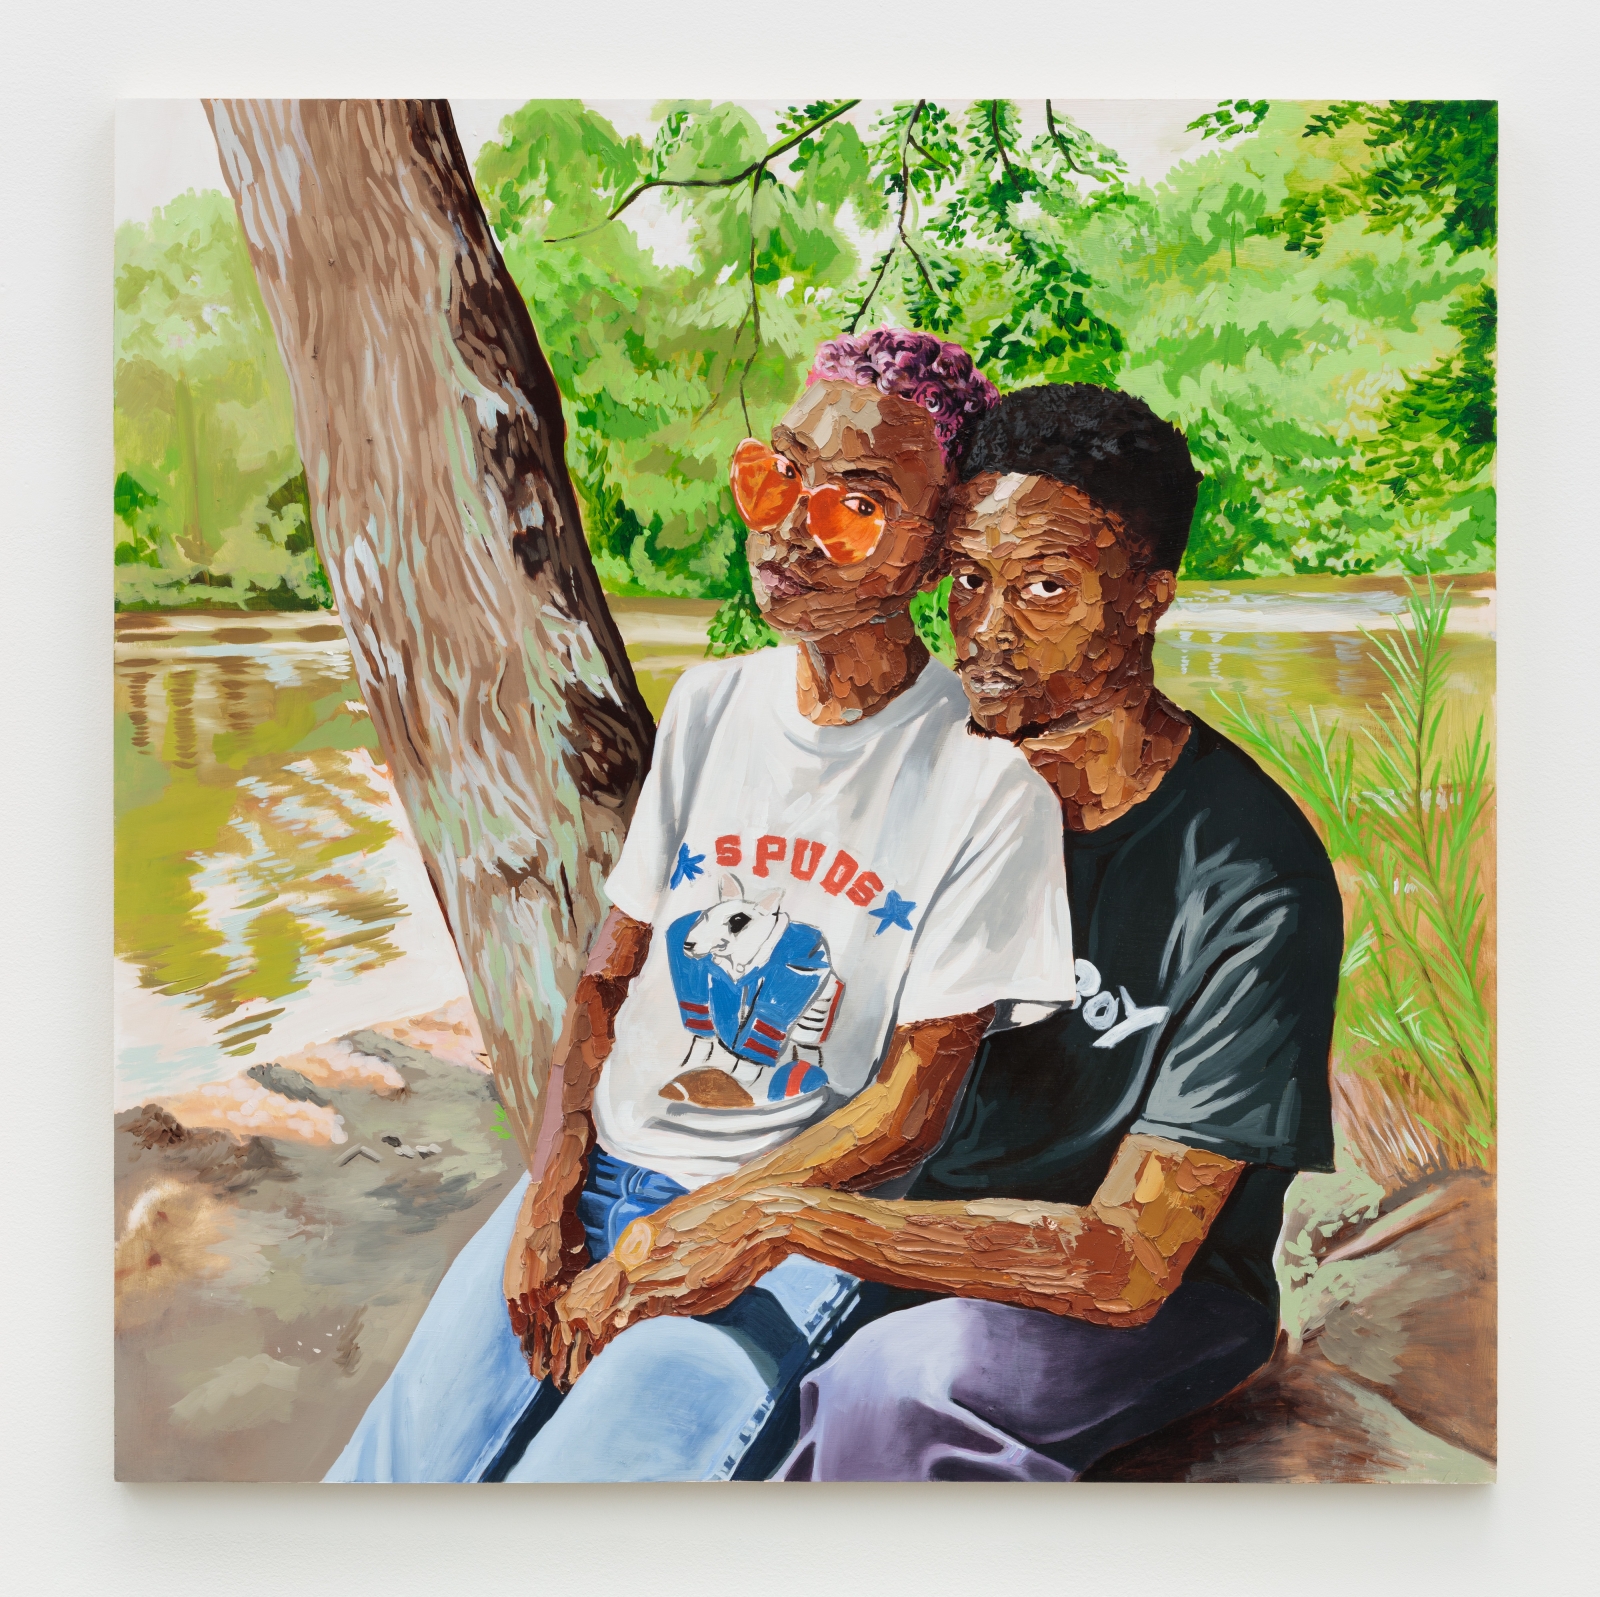 Gerald Lovell
Kiante and Charletta, 2019
oil on wood
48 x 48 ins.
121.9 x 121.9 cm